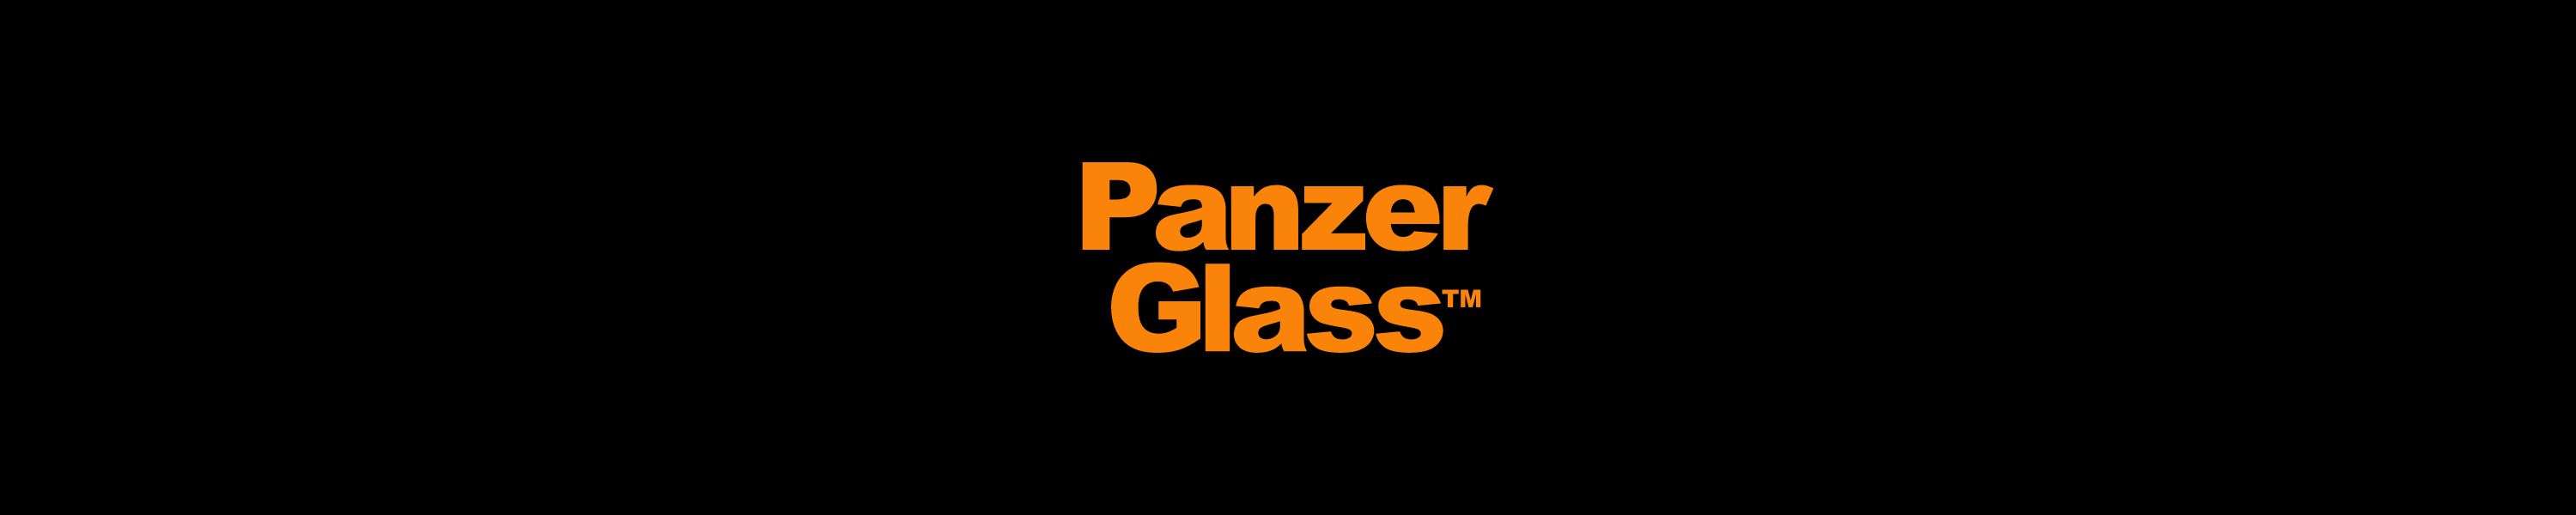 PanzerGlass™